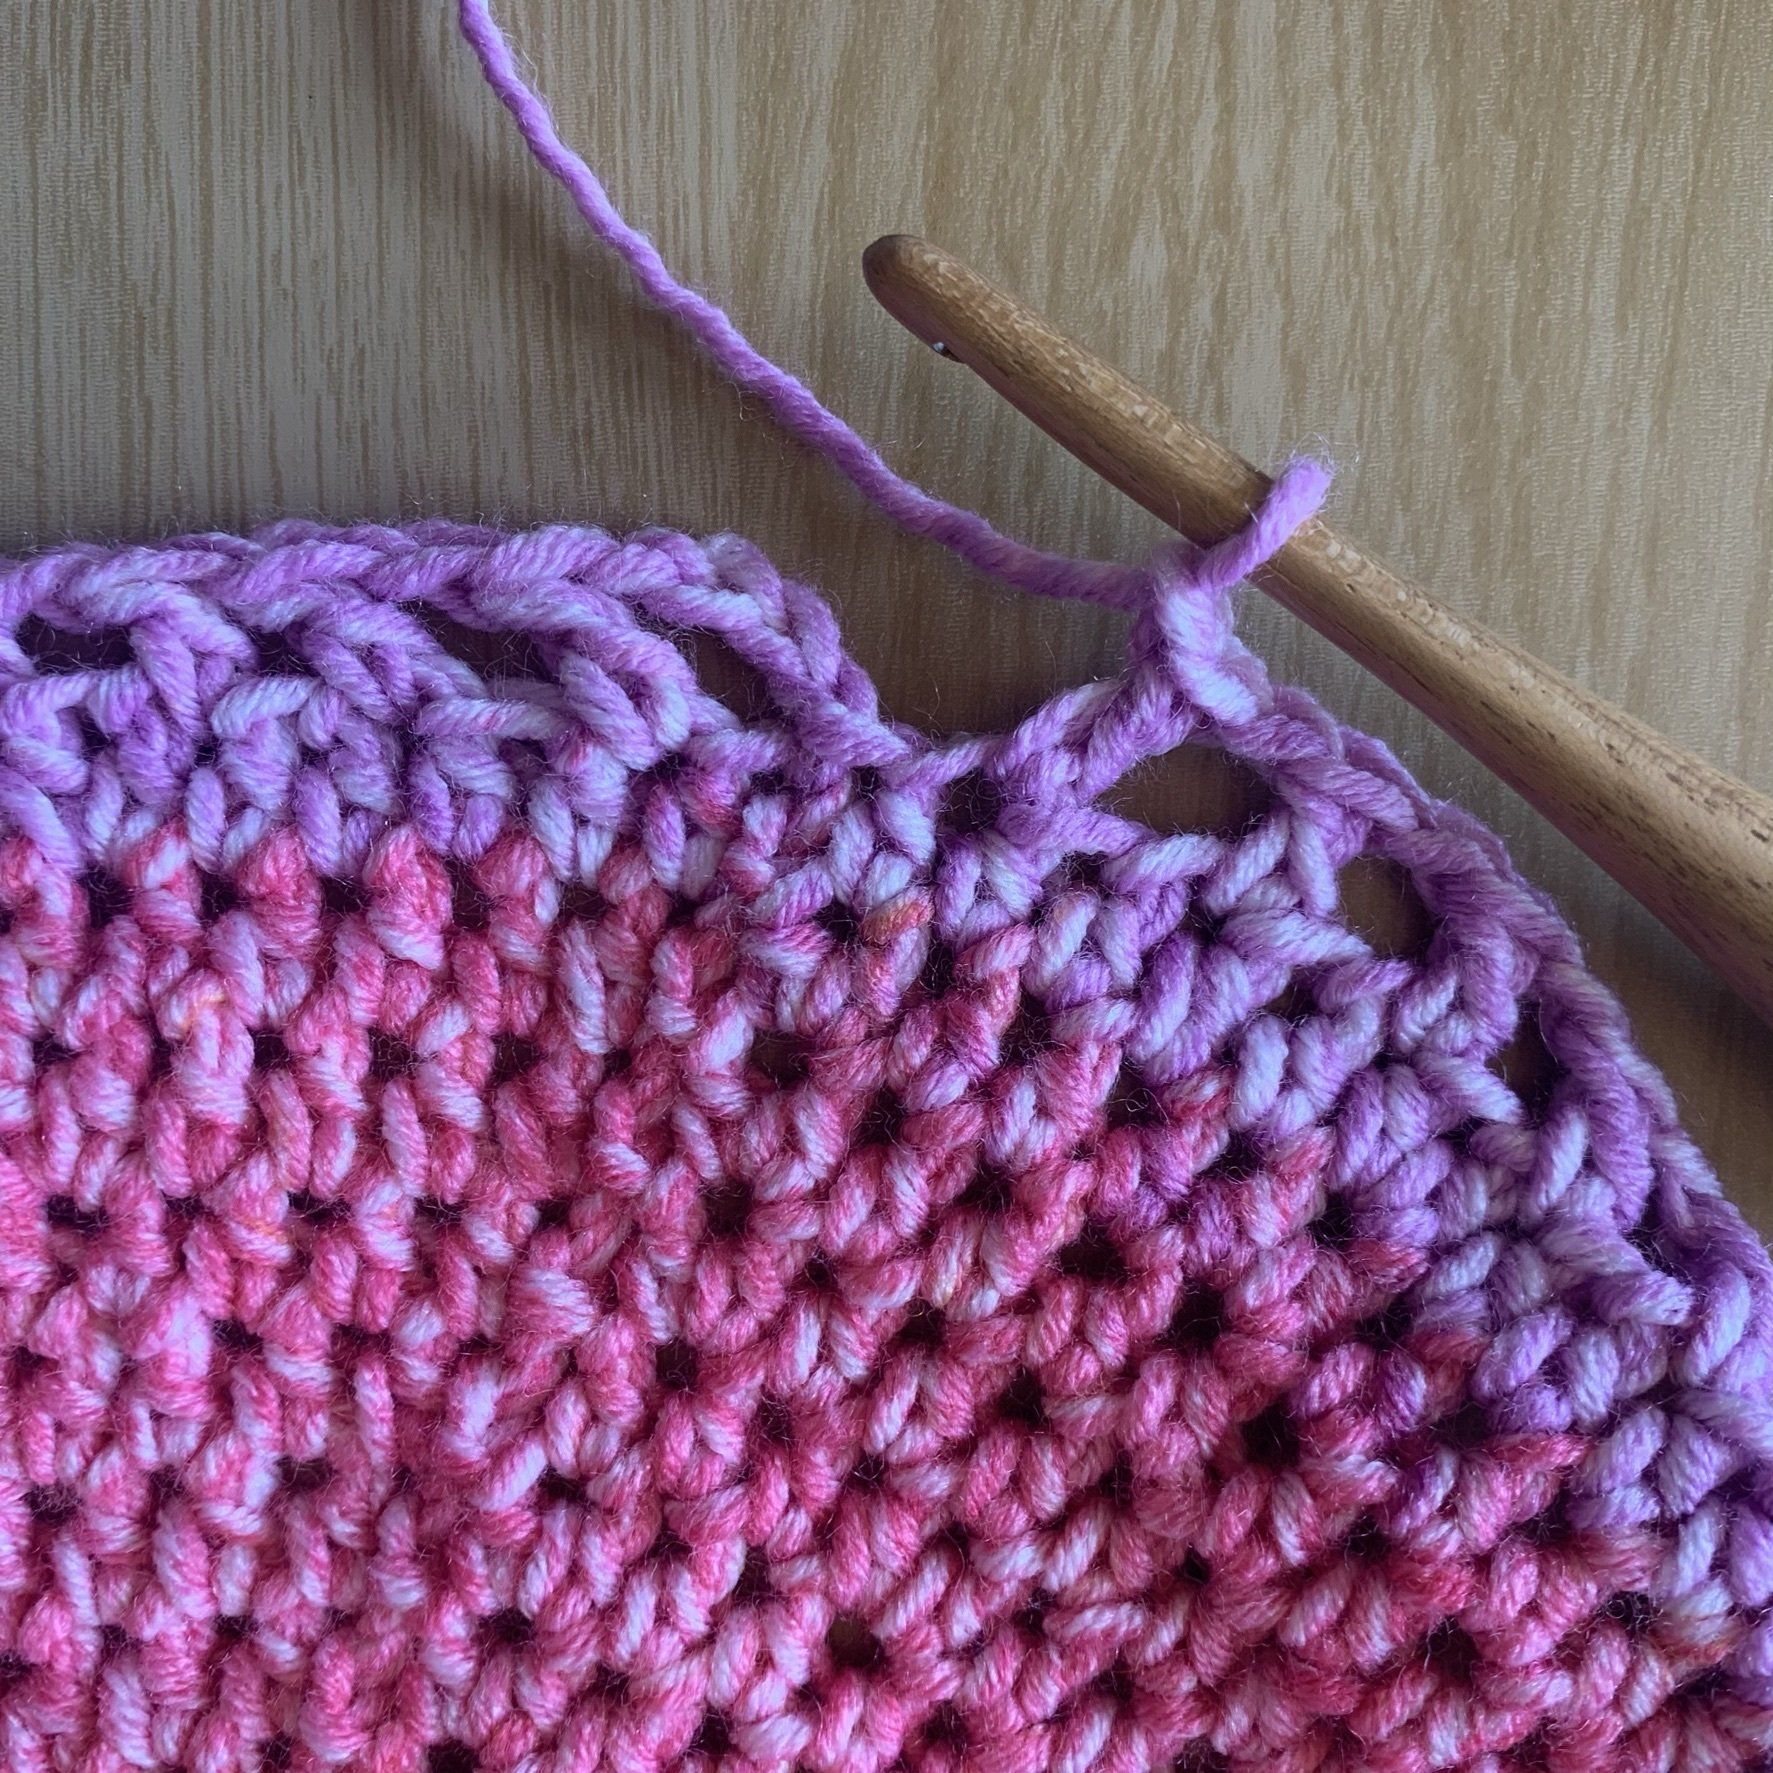 How to crochet a mesh market bag